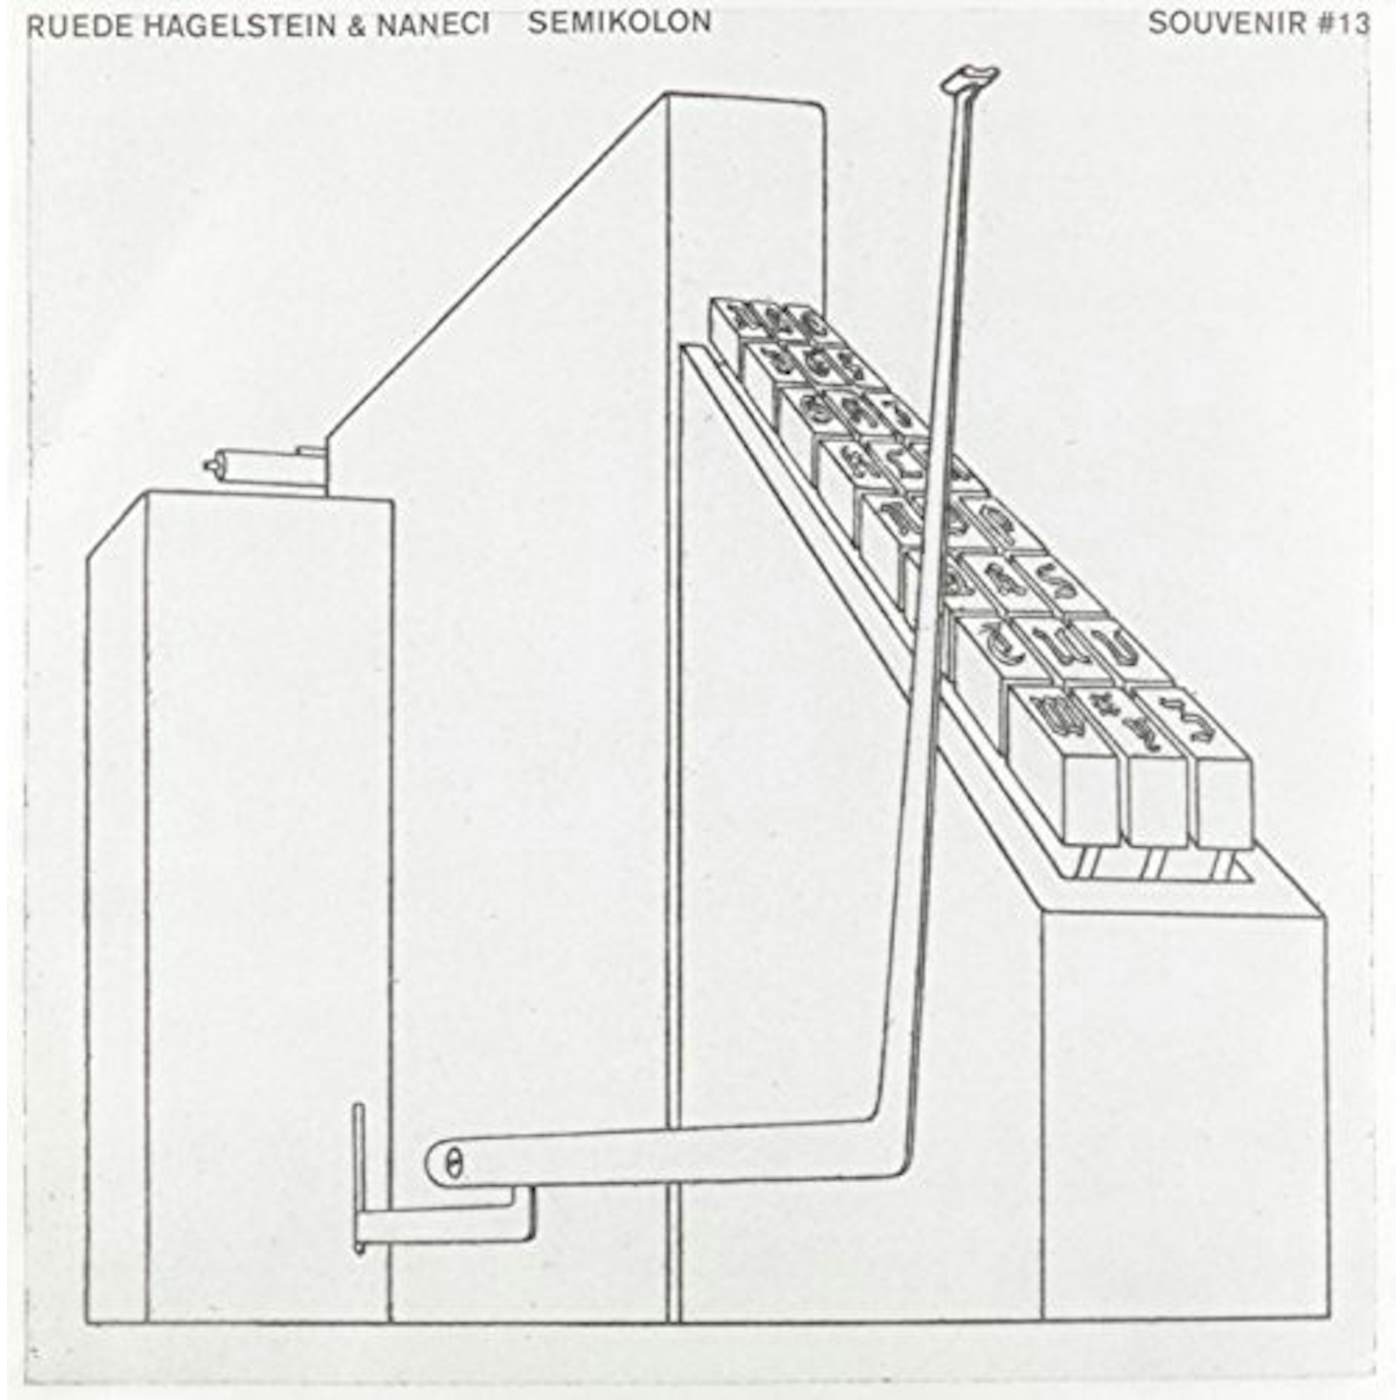 Ruede Hagelstein & Naneci Semikolon Vinyl Record